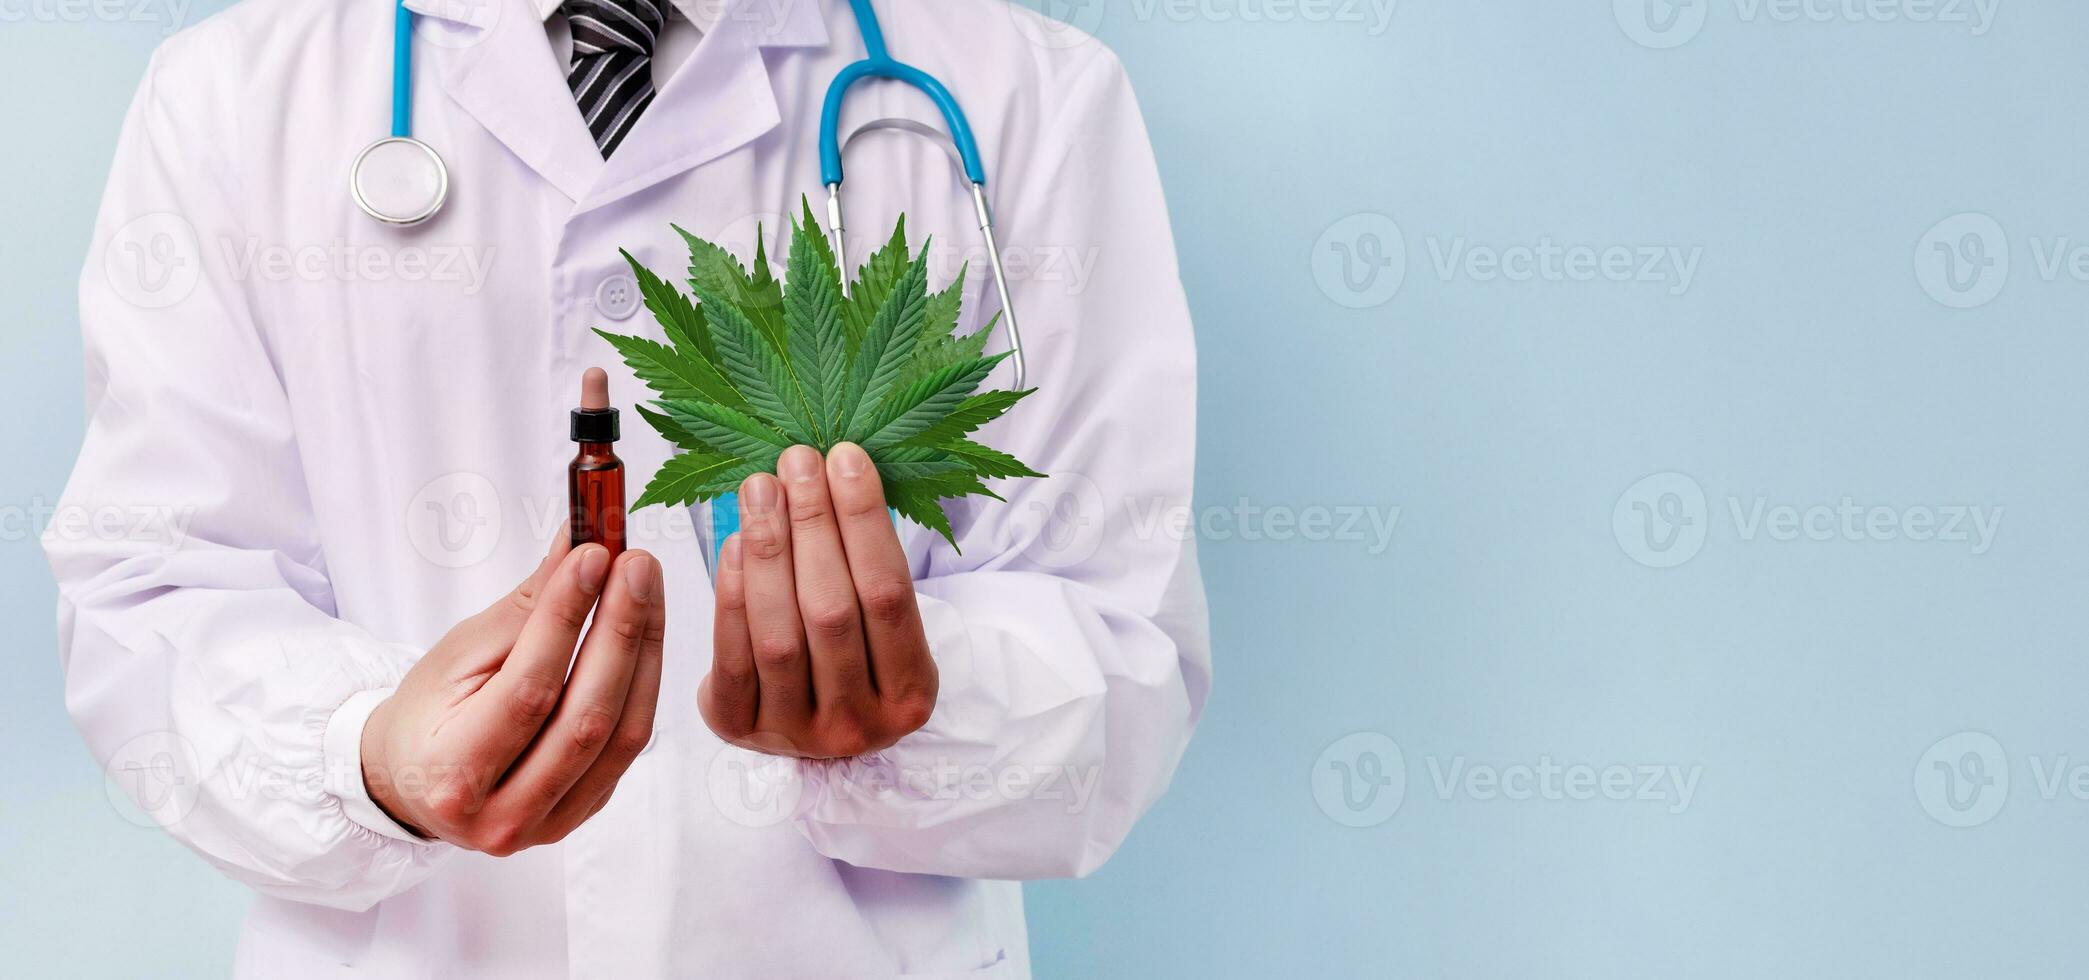 Doctor hands holding cardboard figure of cannabis leaves. Marijuana symbol medical concept. photo